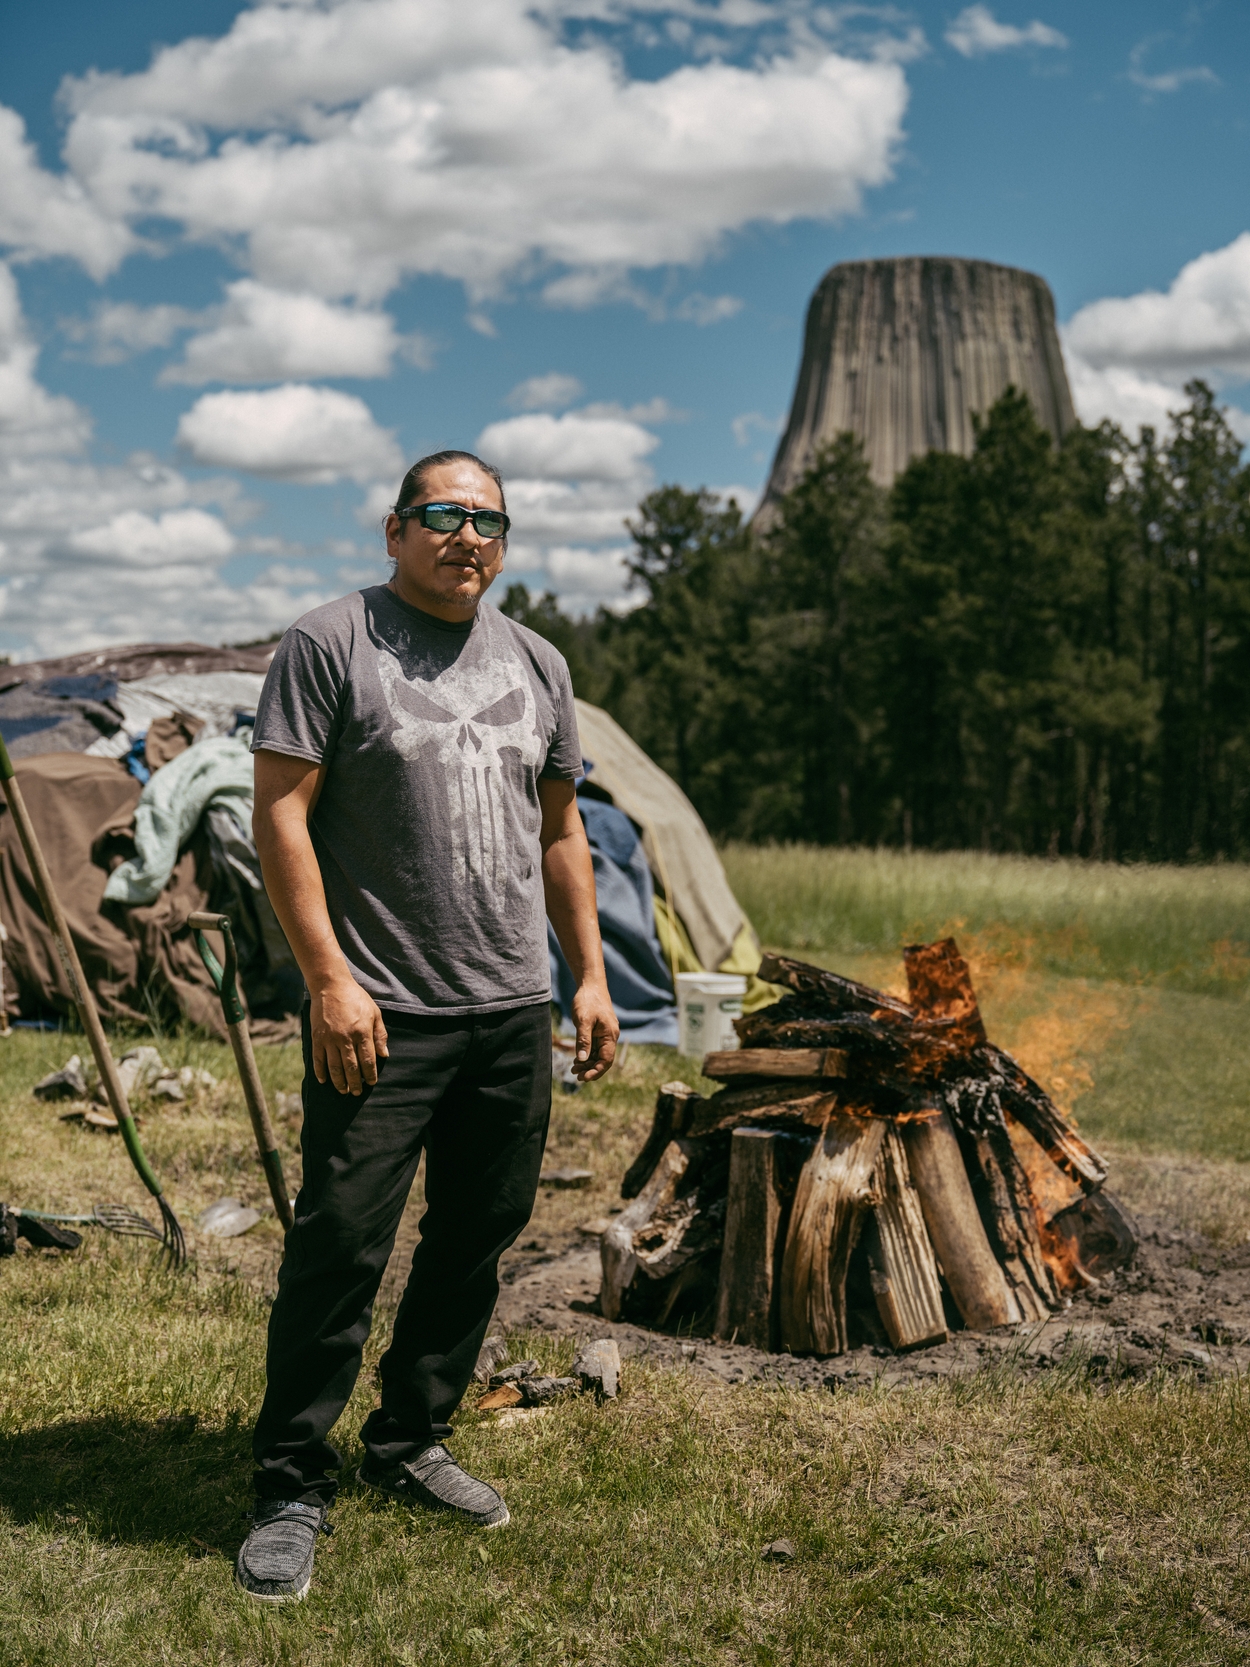 Jesse White Bull, Hunkpapa Dakota/Lakota, in Ondersteboven van de Amerika's